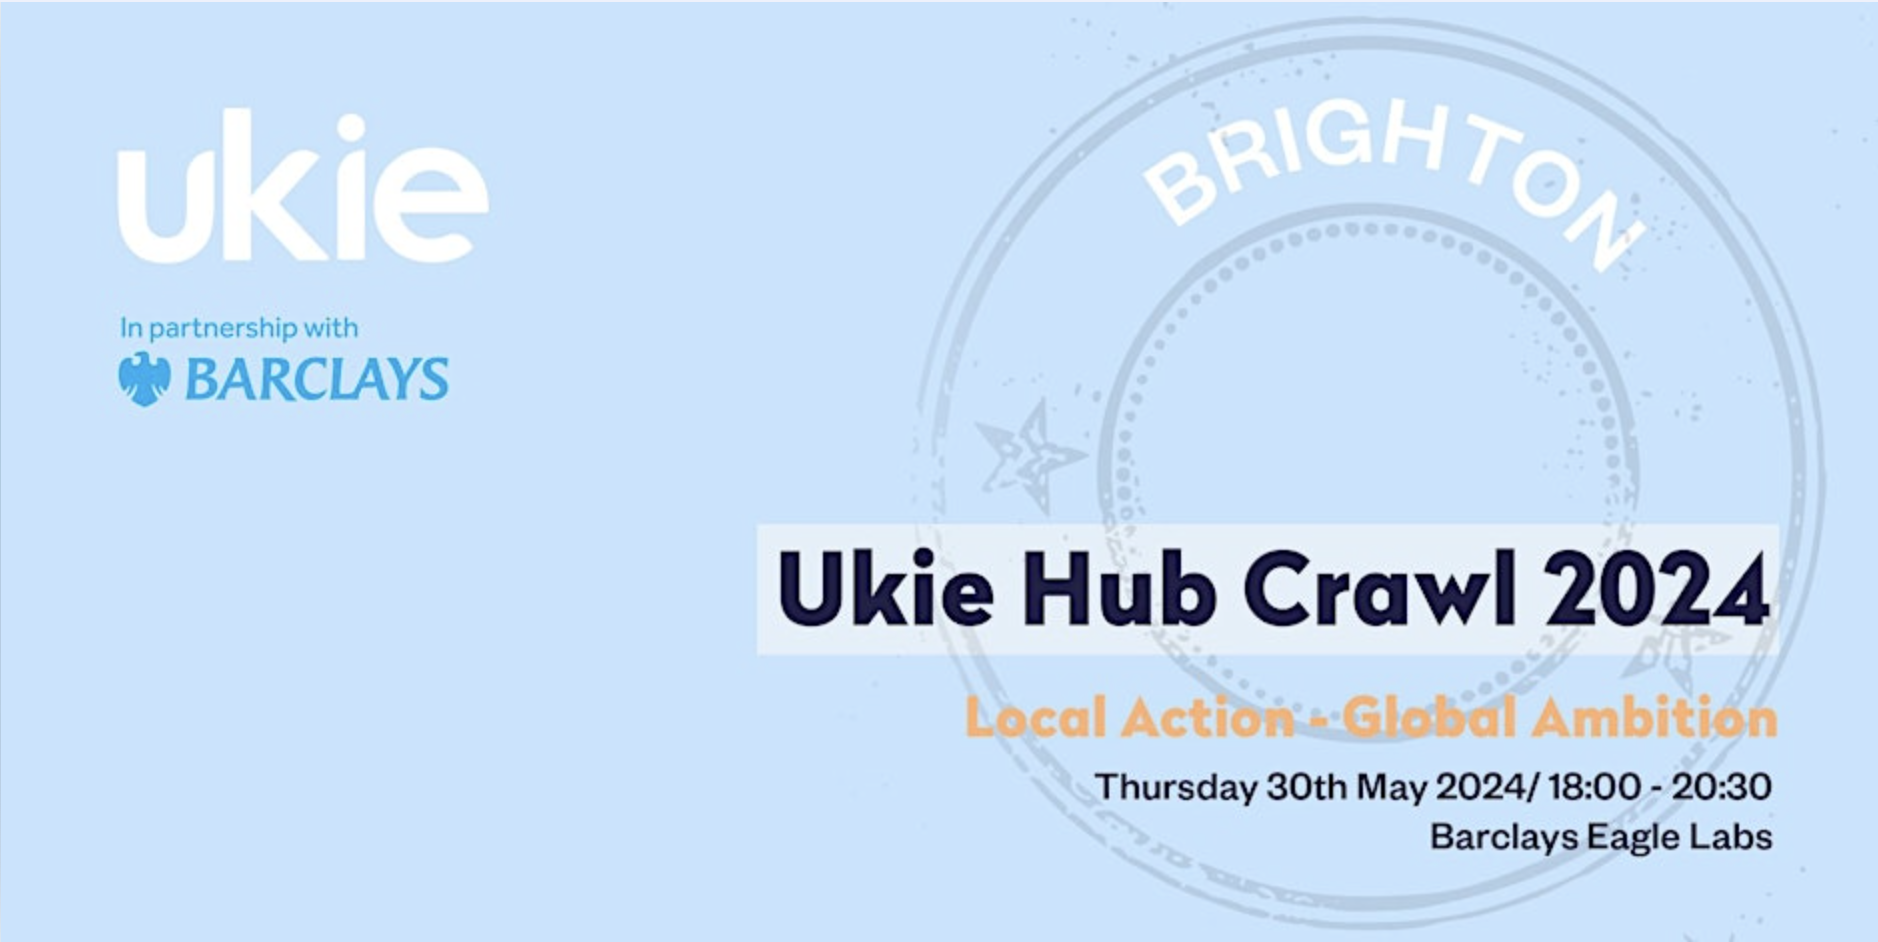 Ukie Hub Crawl Brighton - Local Action: Global Ambition